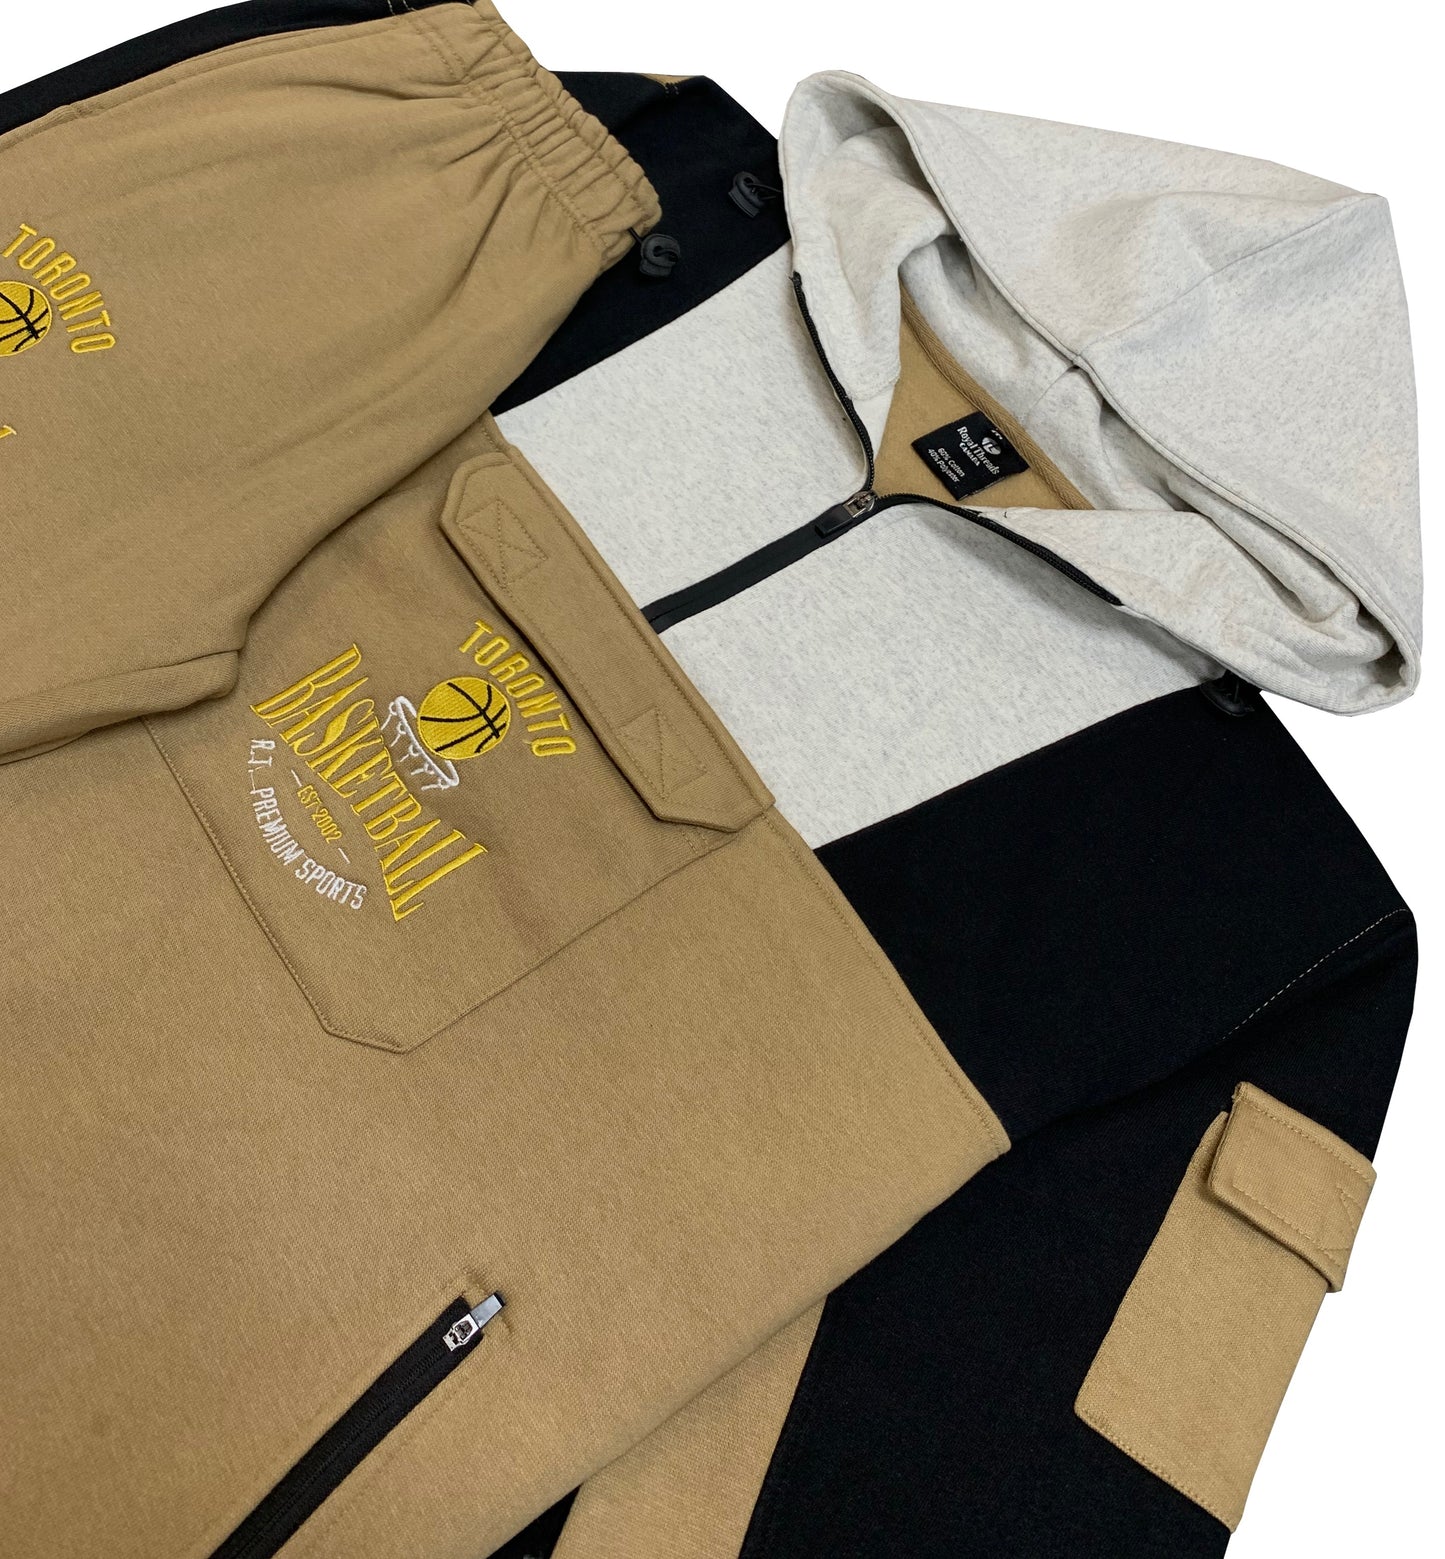 Men’s 2-Piece Sweatsuit Quarter Zip basketball Theme Hoodie and sweatpants Heavy Duty Winter Fleece Outfit